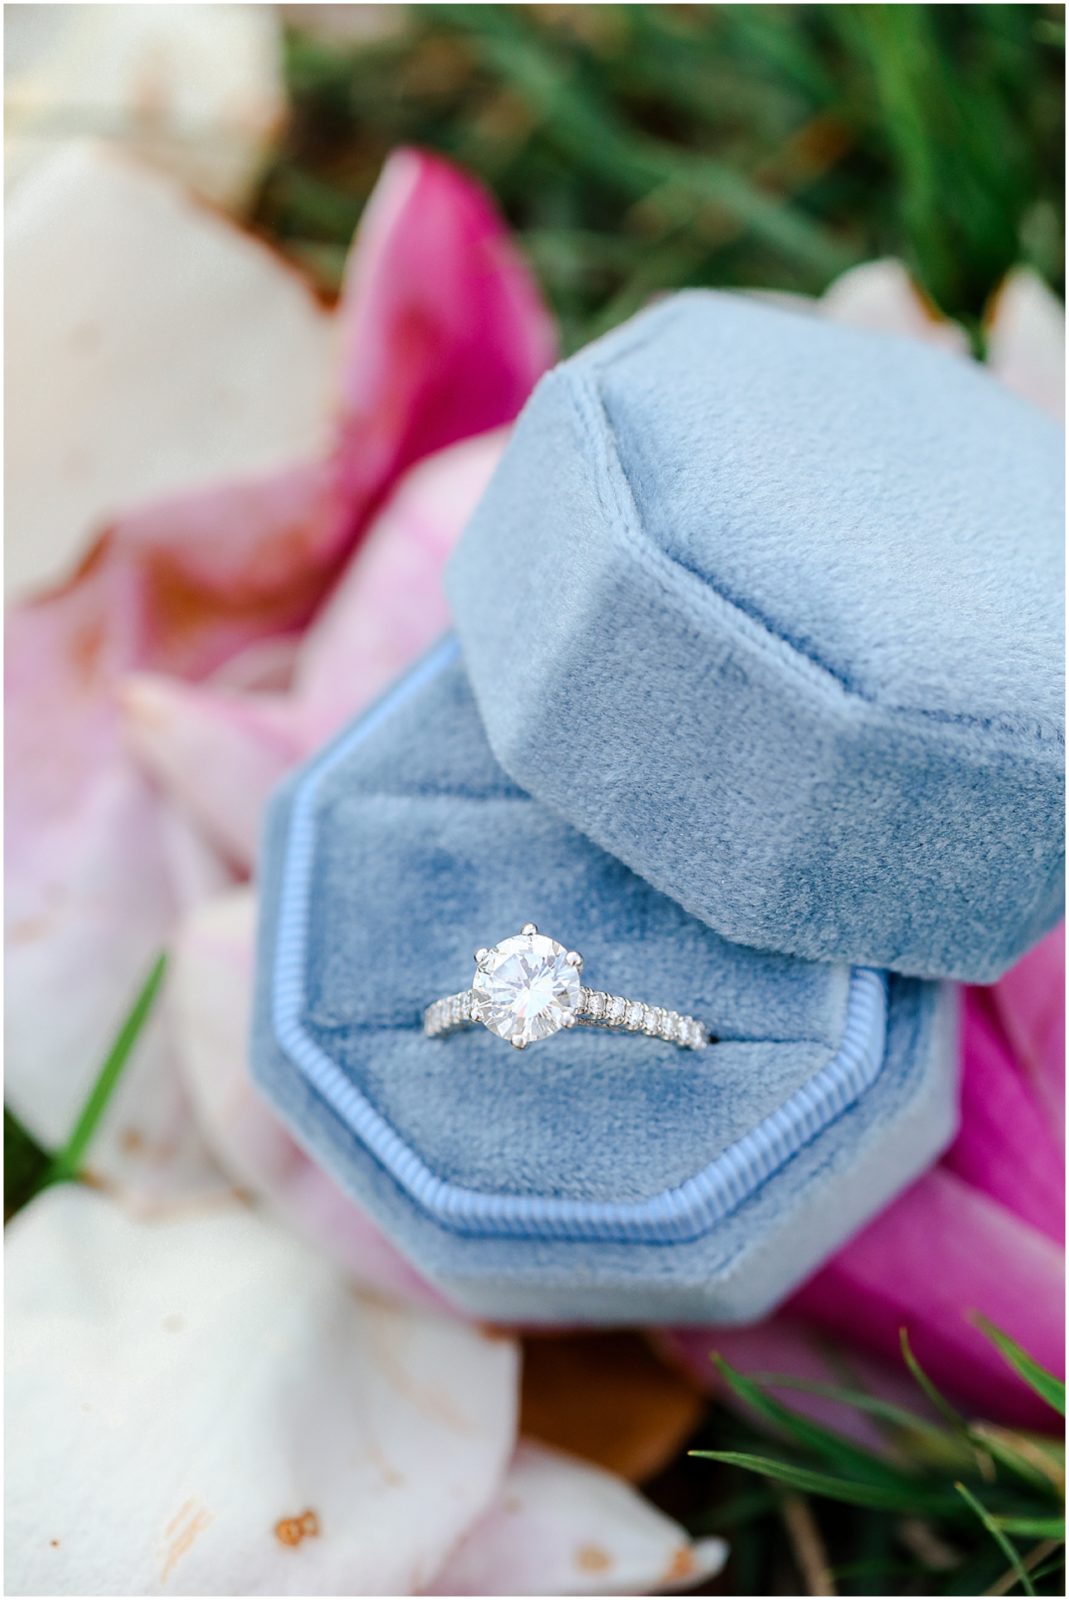 beautiful diamond engagement ring photo - engagement photographers in kansas city and overland park - ring box